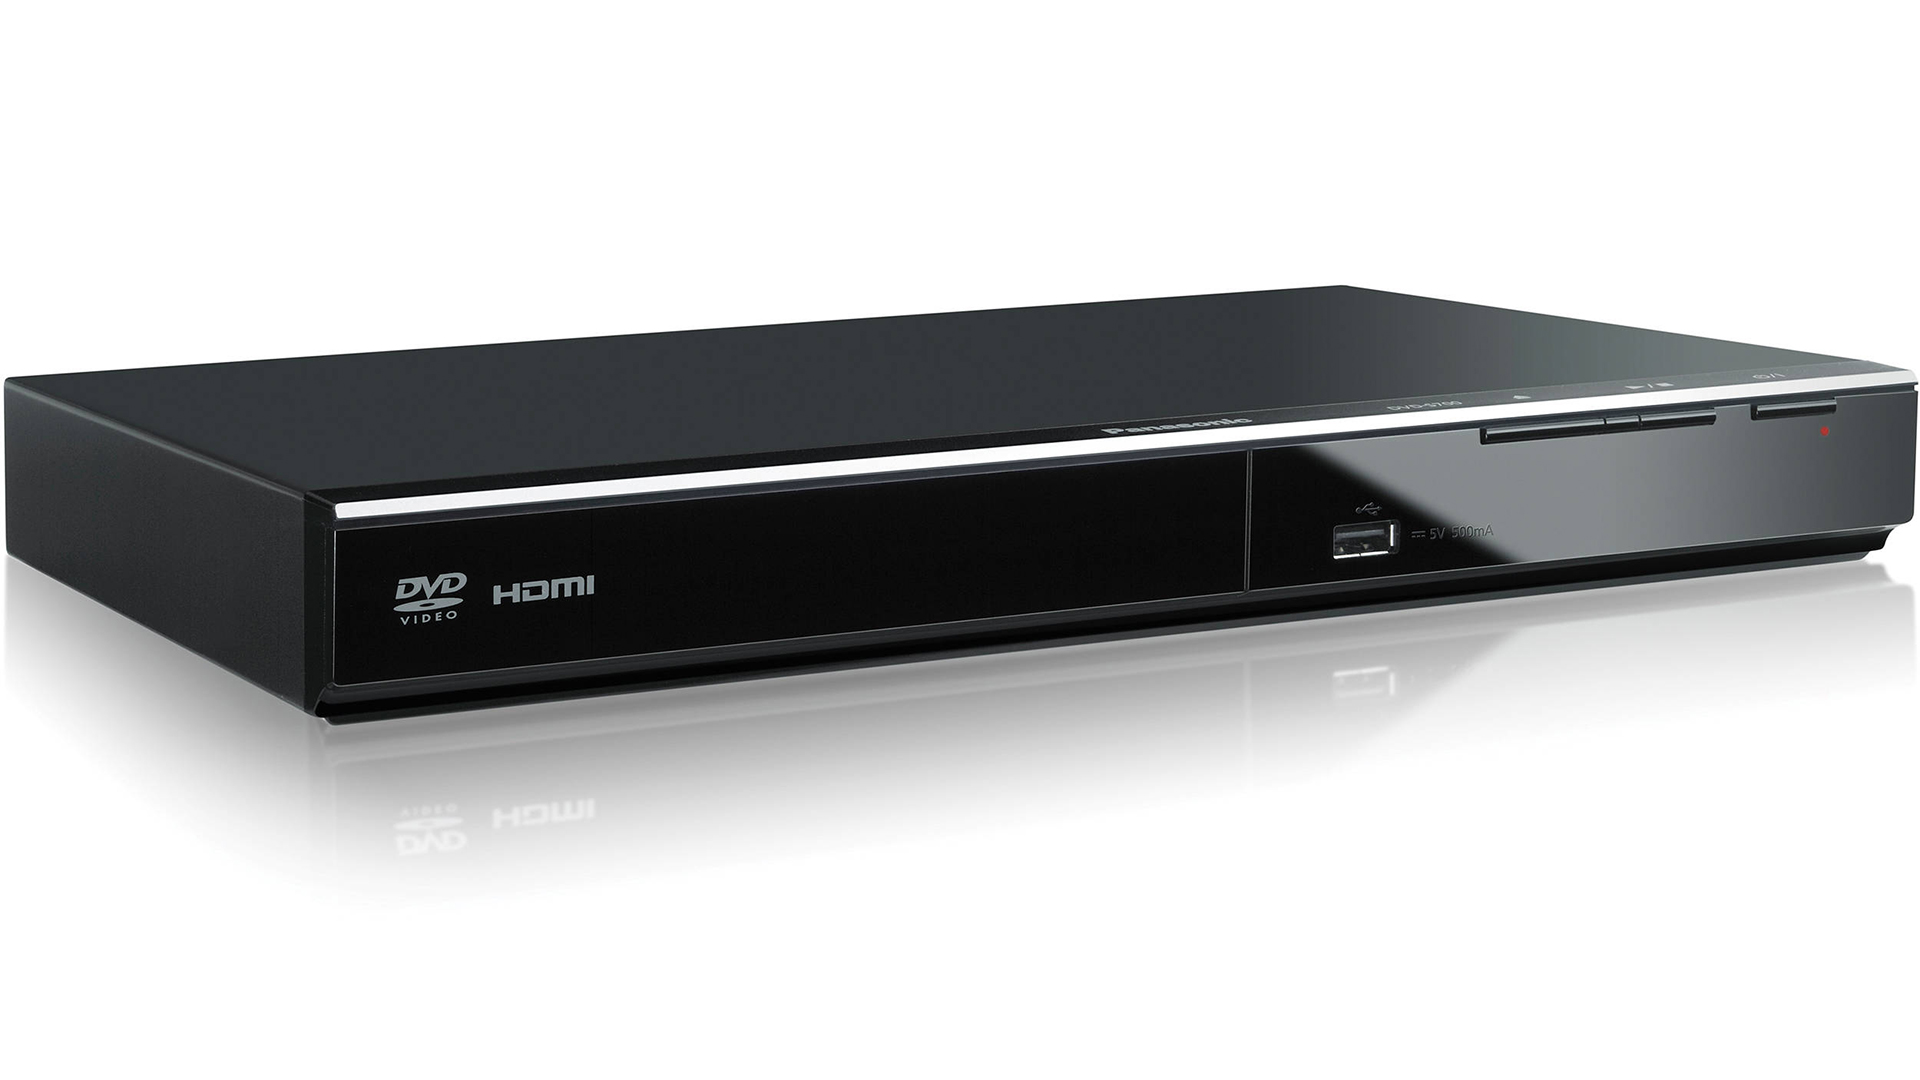 Panasonic Dvd S700 Dvd Player Review Top Ten Reviews